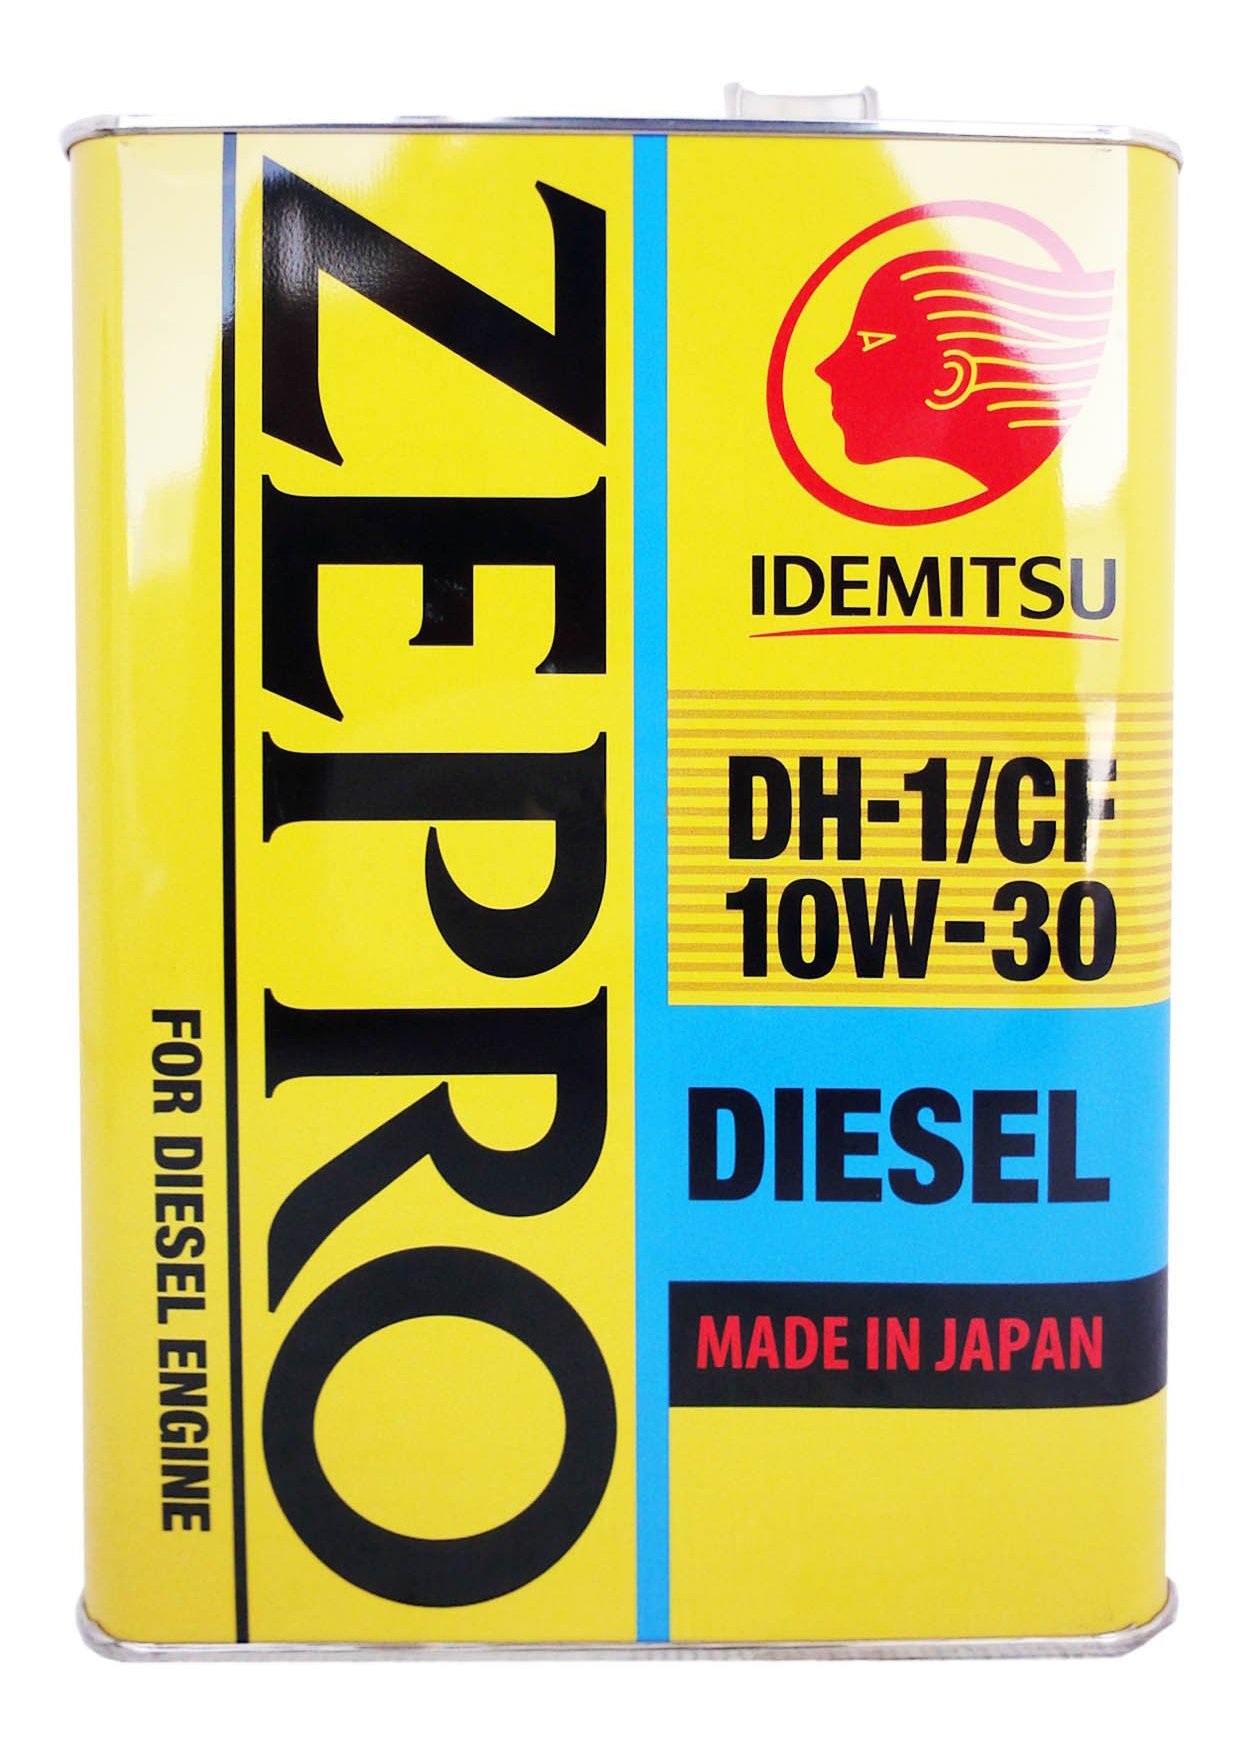 фото Idemitsu моторное масло zepro diesel 10w30 4l dh-1/cf